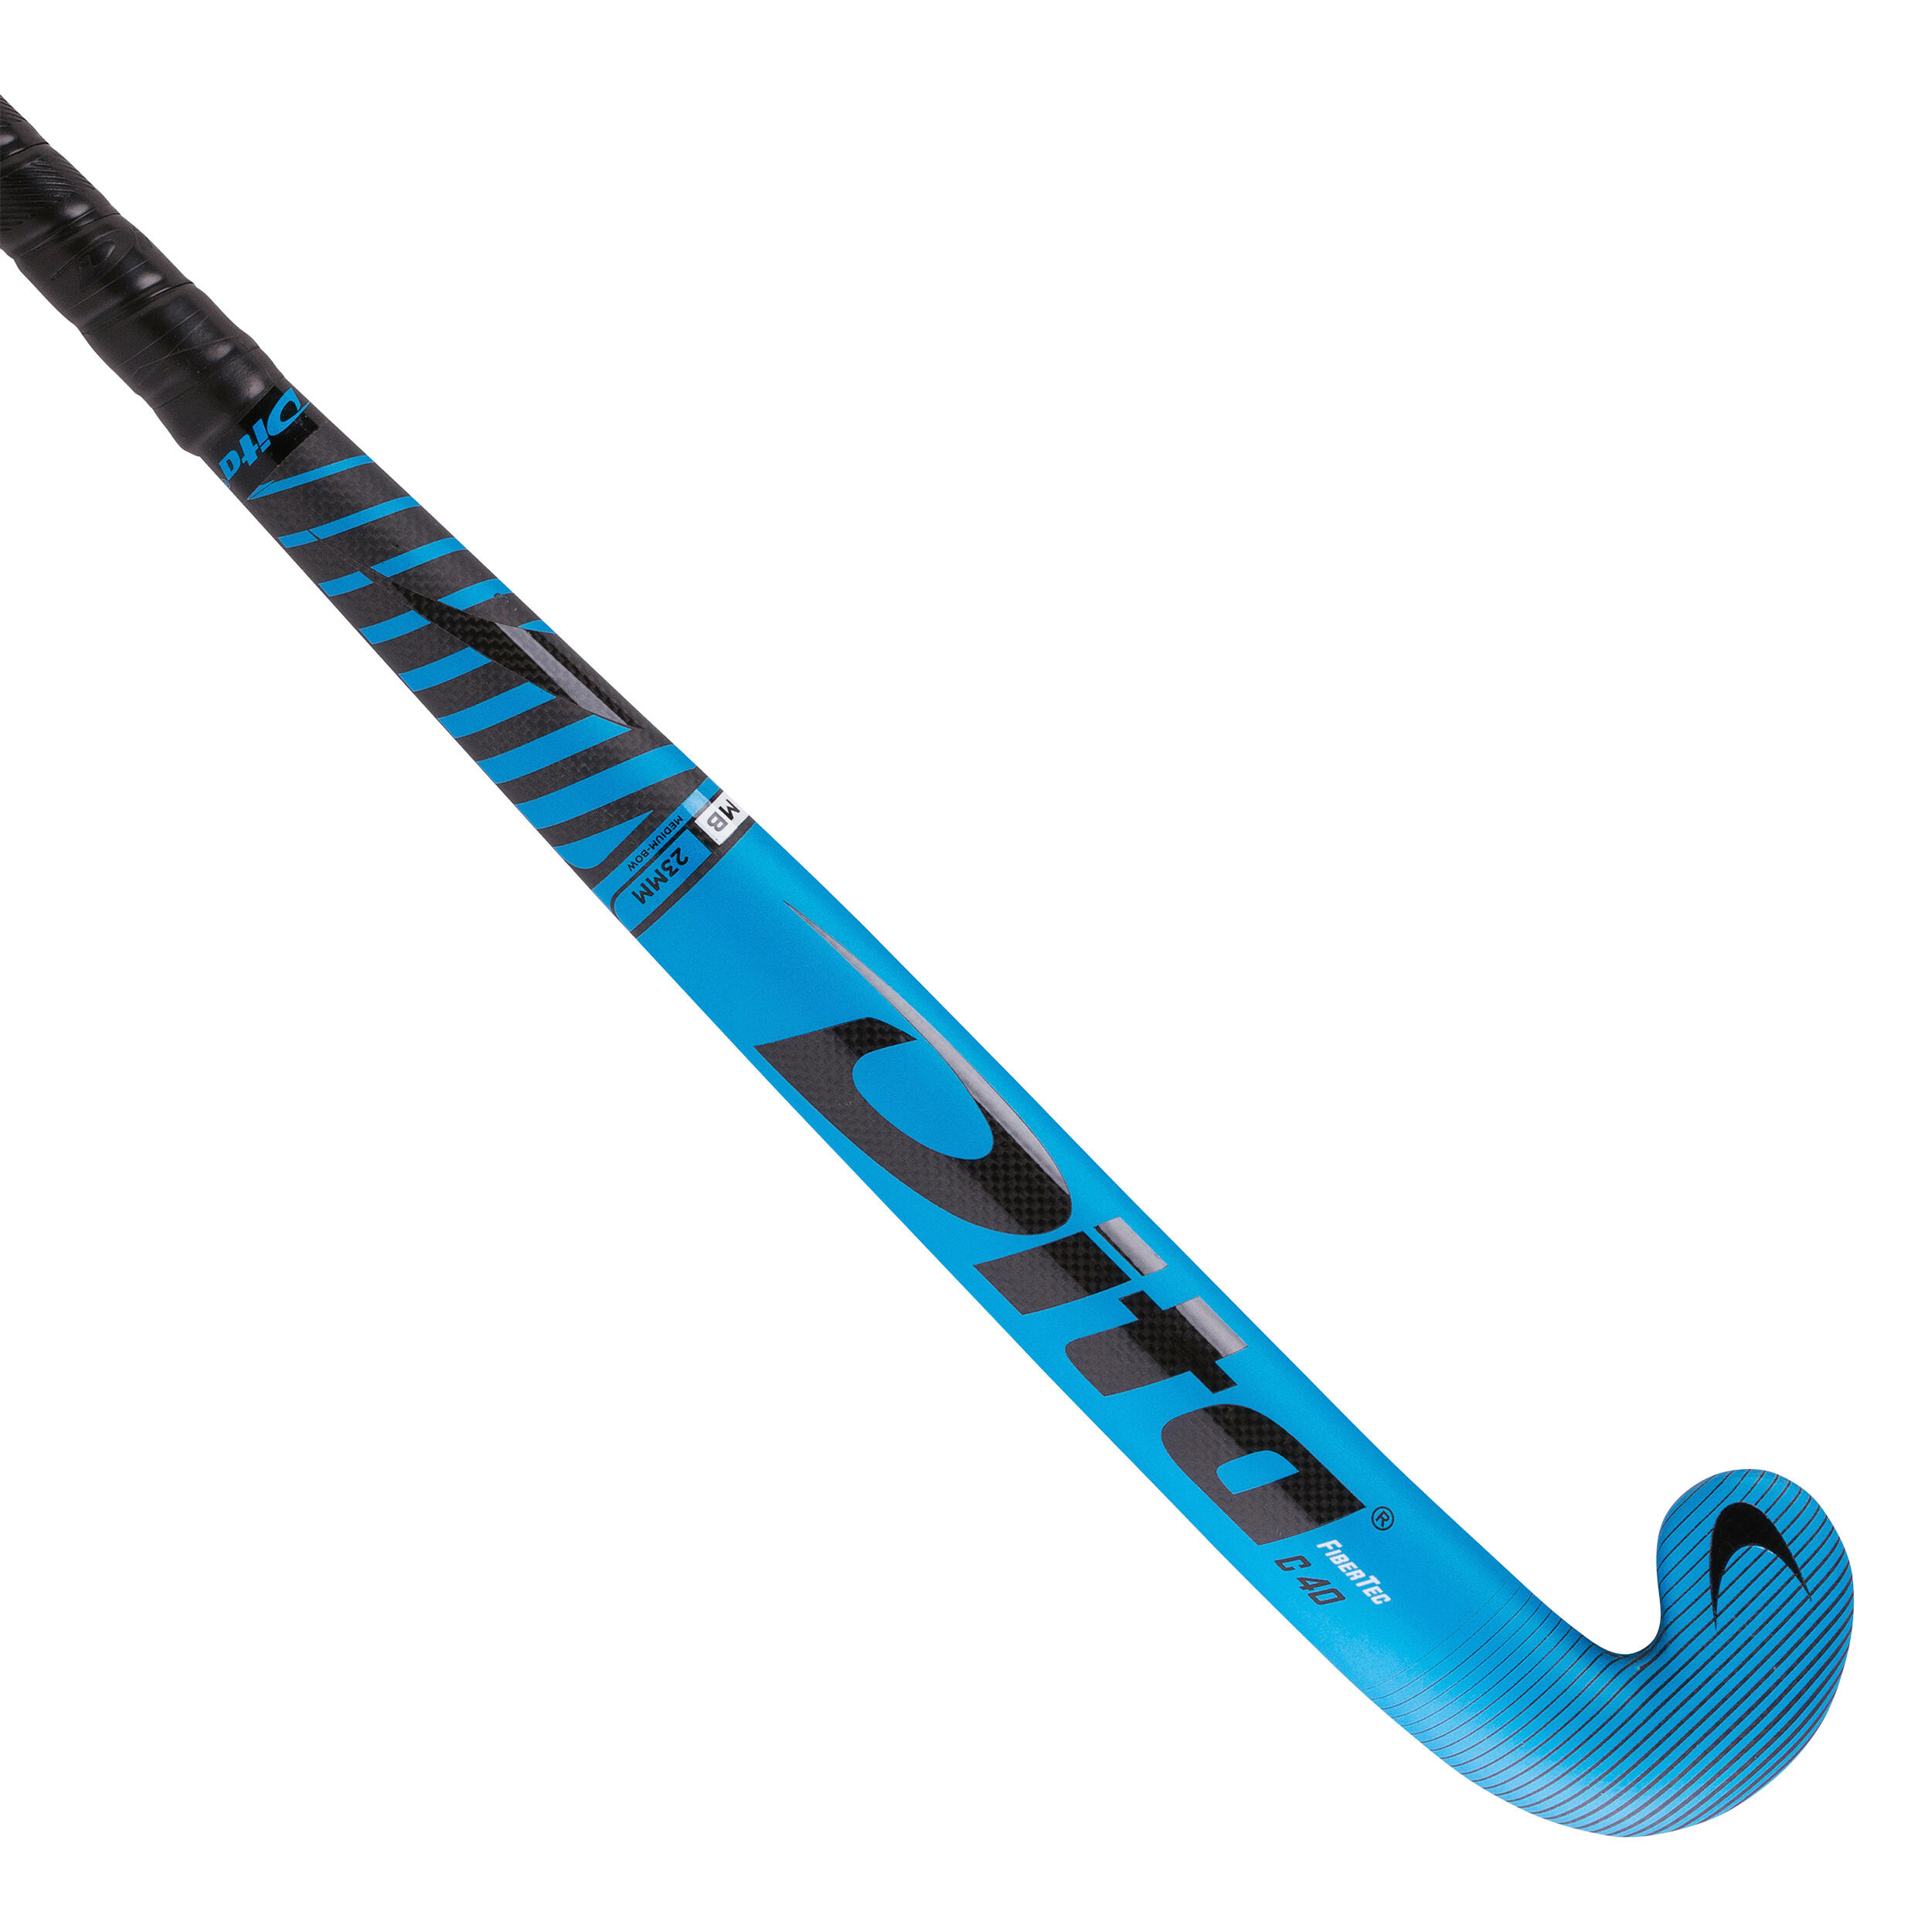 Intermediate 40% Carbon Mid Bow Field Hockey Stick FiberTecC40 - Blue 1/12